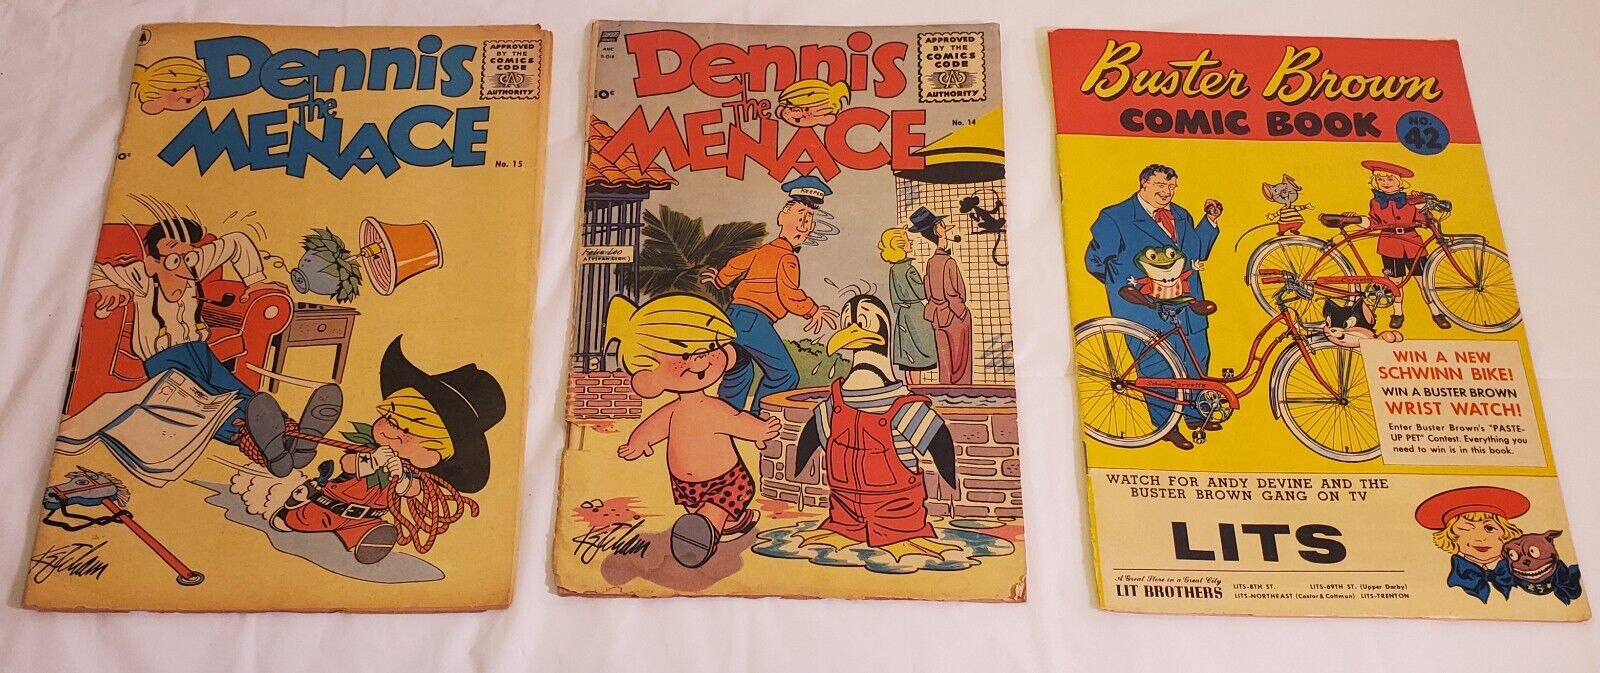 Vintage Dennis the Menace Buster Brown Comic Book Vintage 1950s Cartoon Draw Art